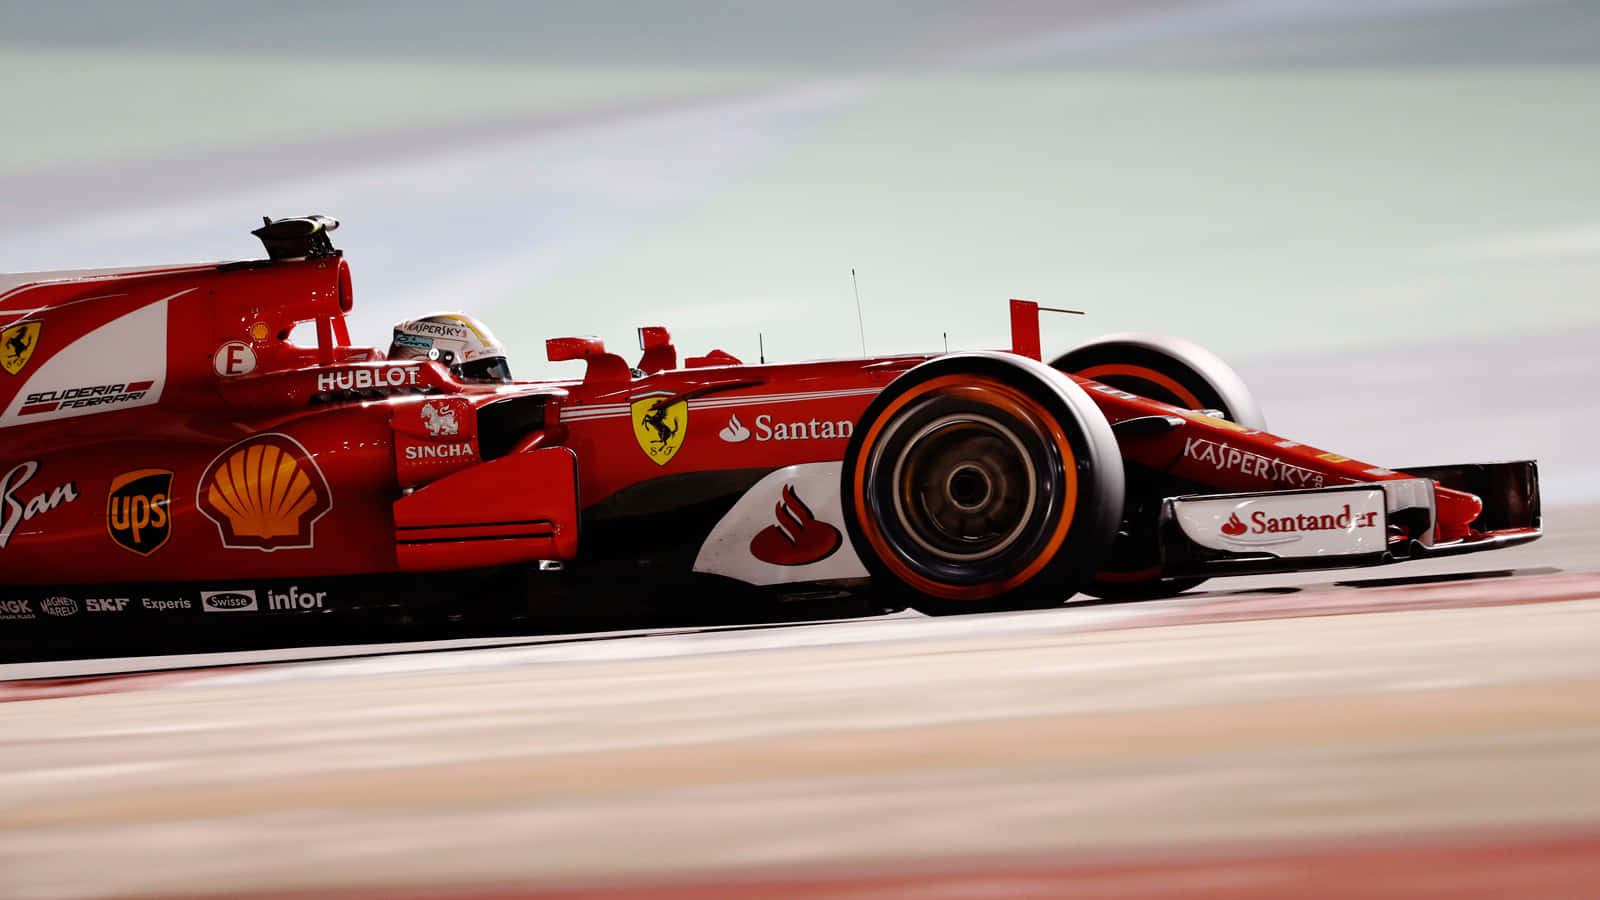 The Ferrari F1 team prepares for the 2019 race season Wallpaper